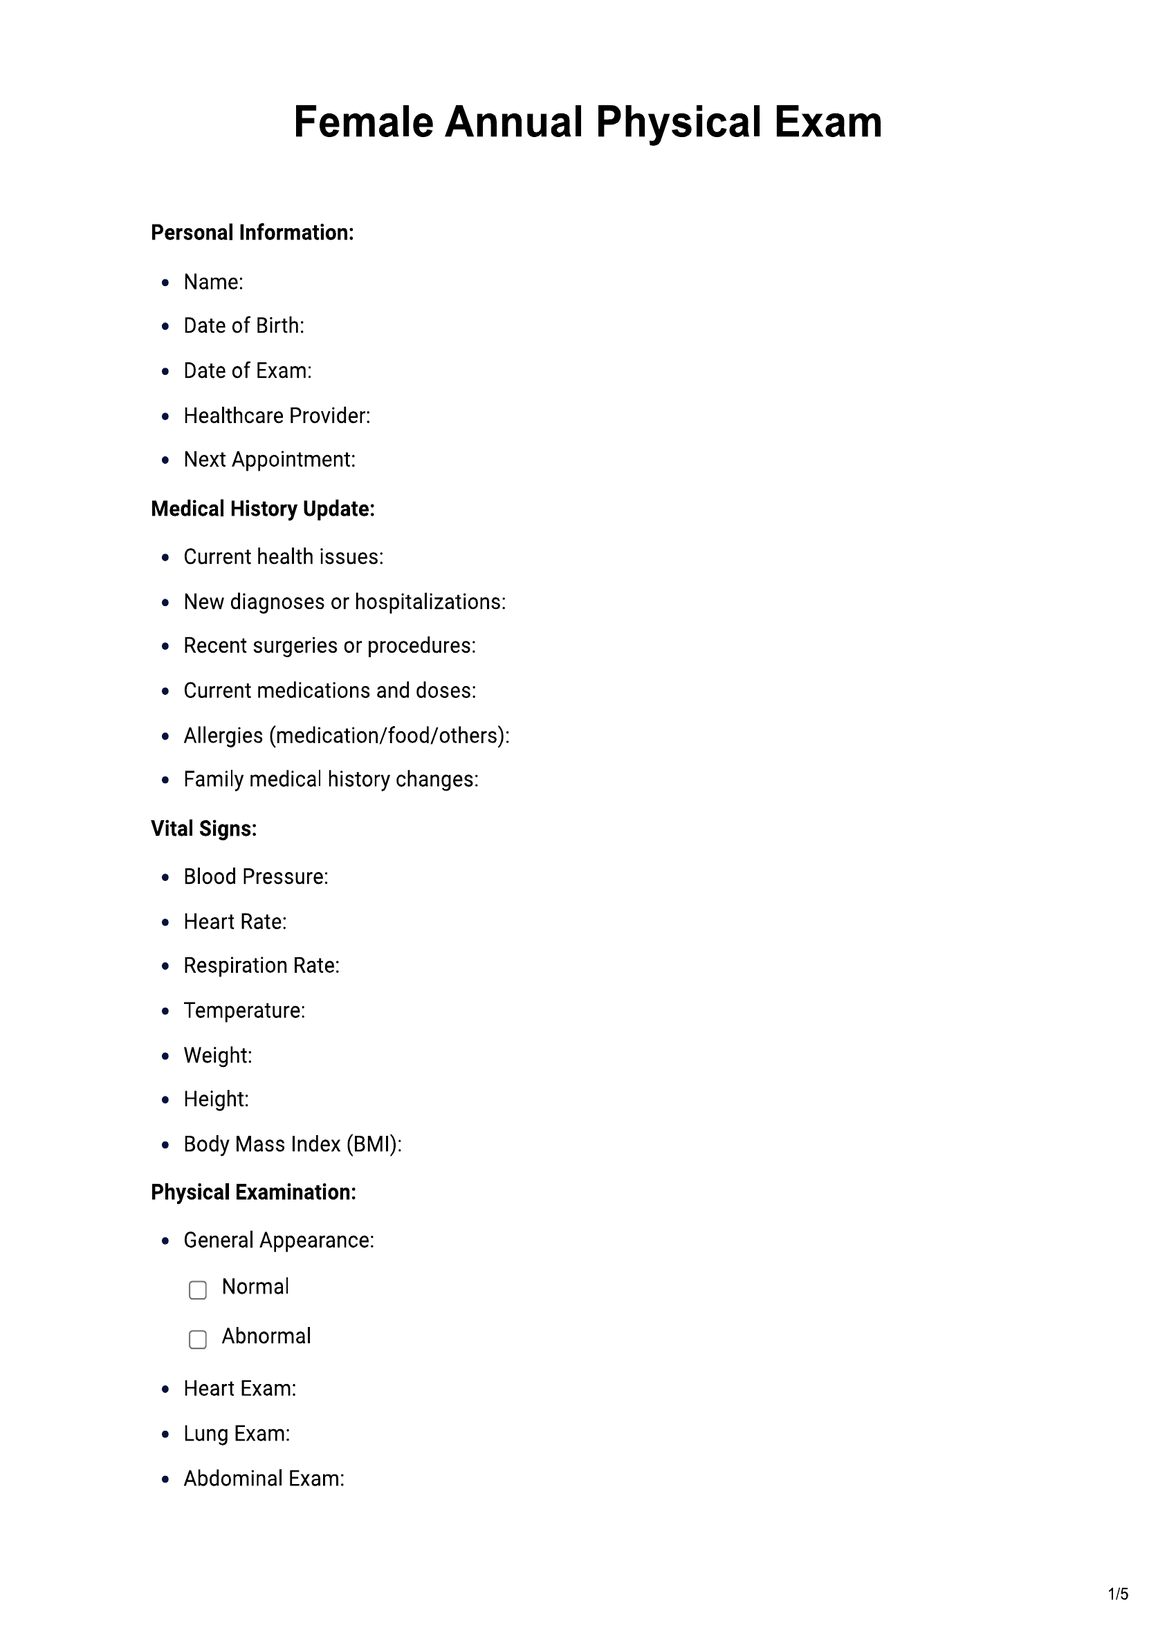 Female Annual Physical Exam PDF Example